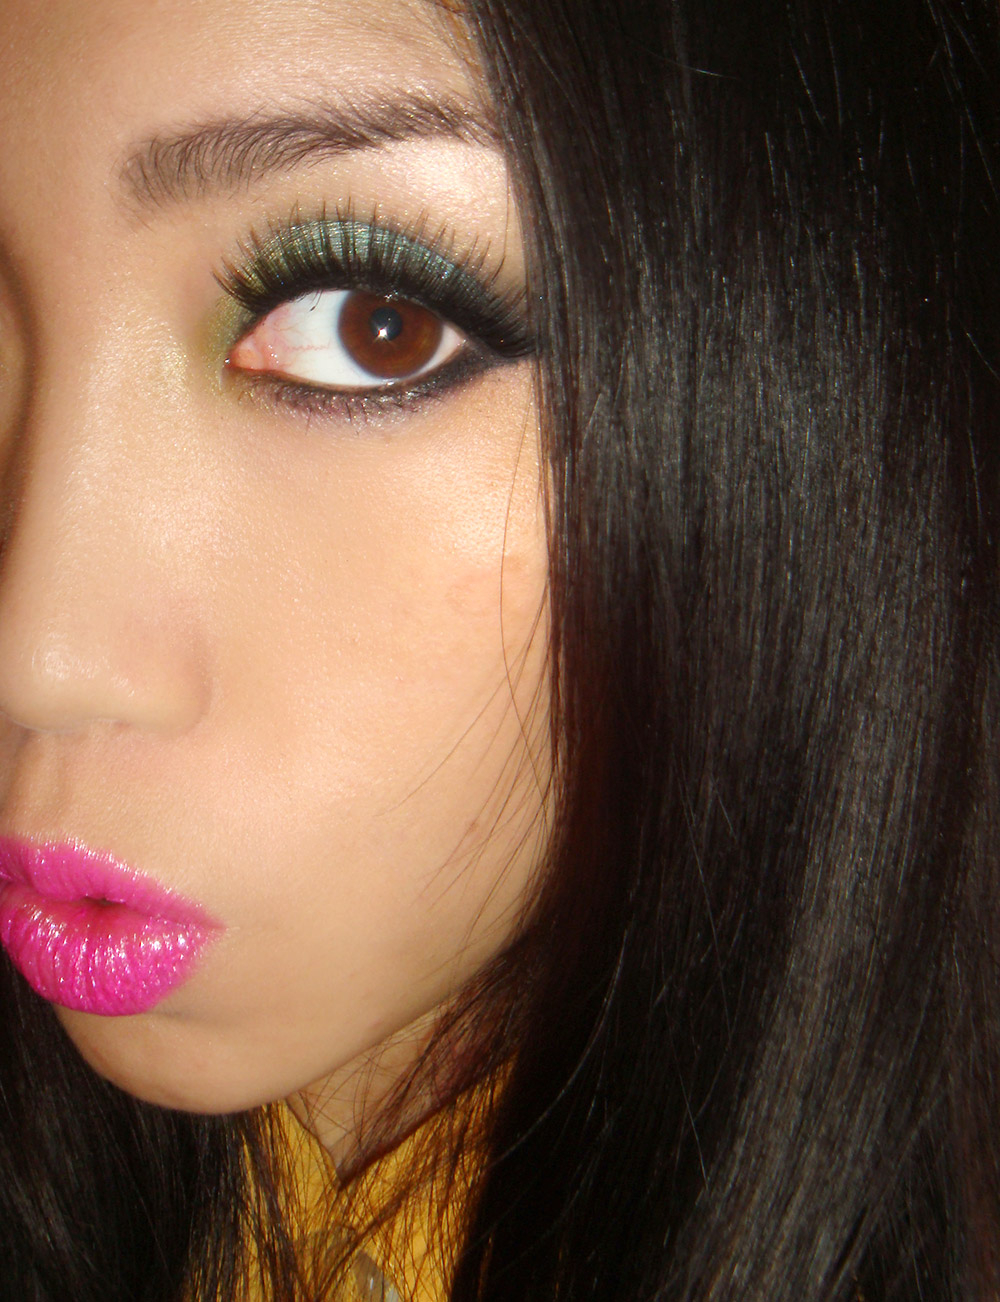 Eye Makeup For Hot Pink Lips Makeup Tutorial Turquoise Smoky Eye Makeup Look Makeup For Life